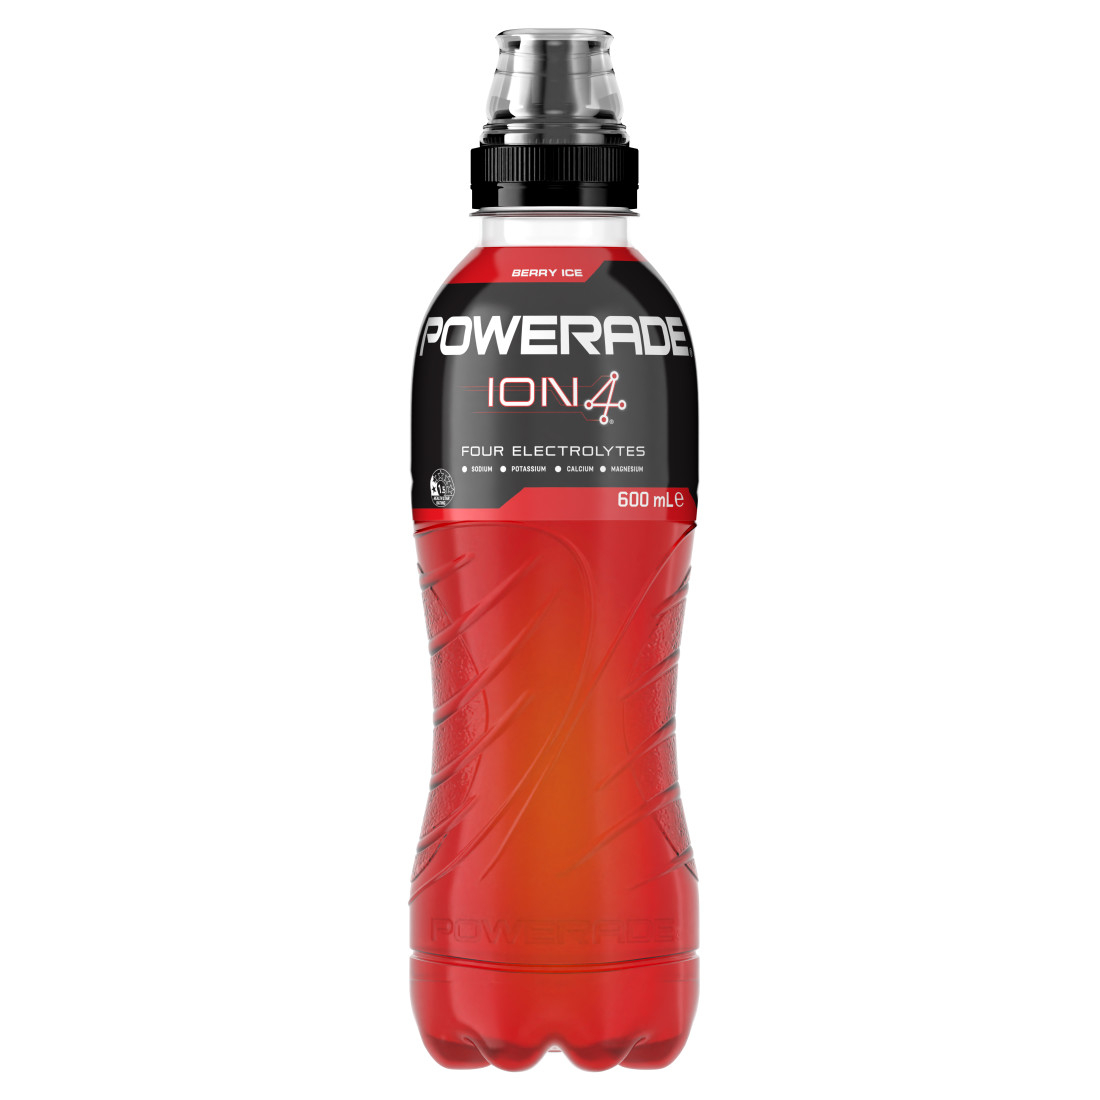 Powerade ION4 Berry Ice bottle